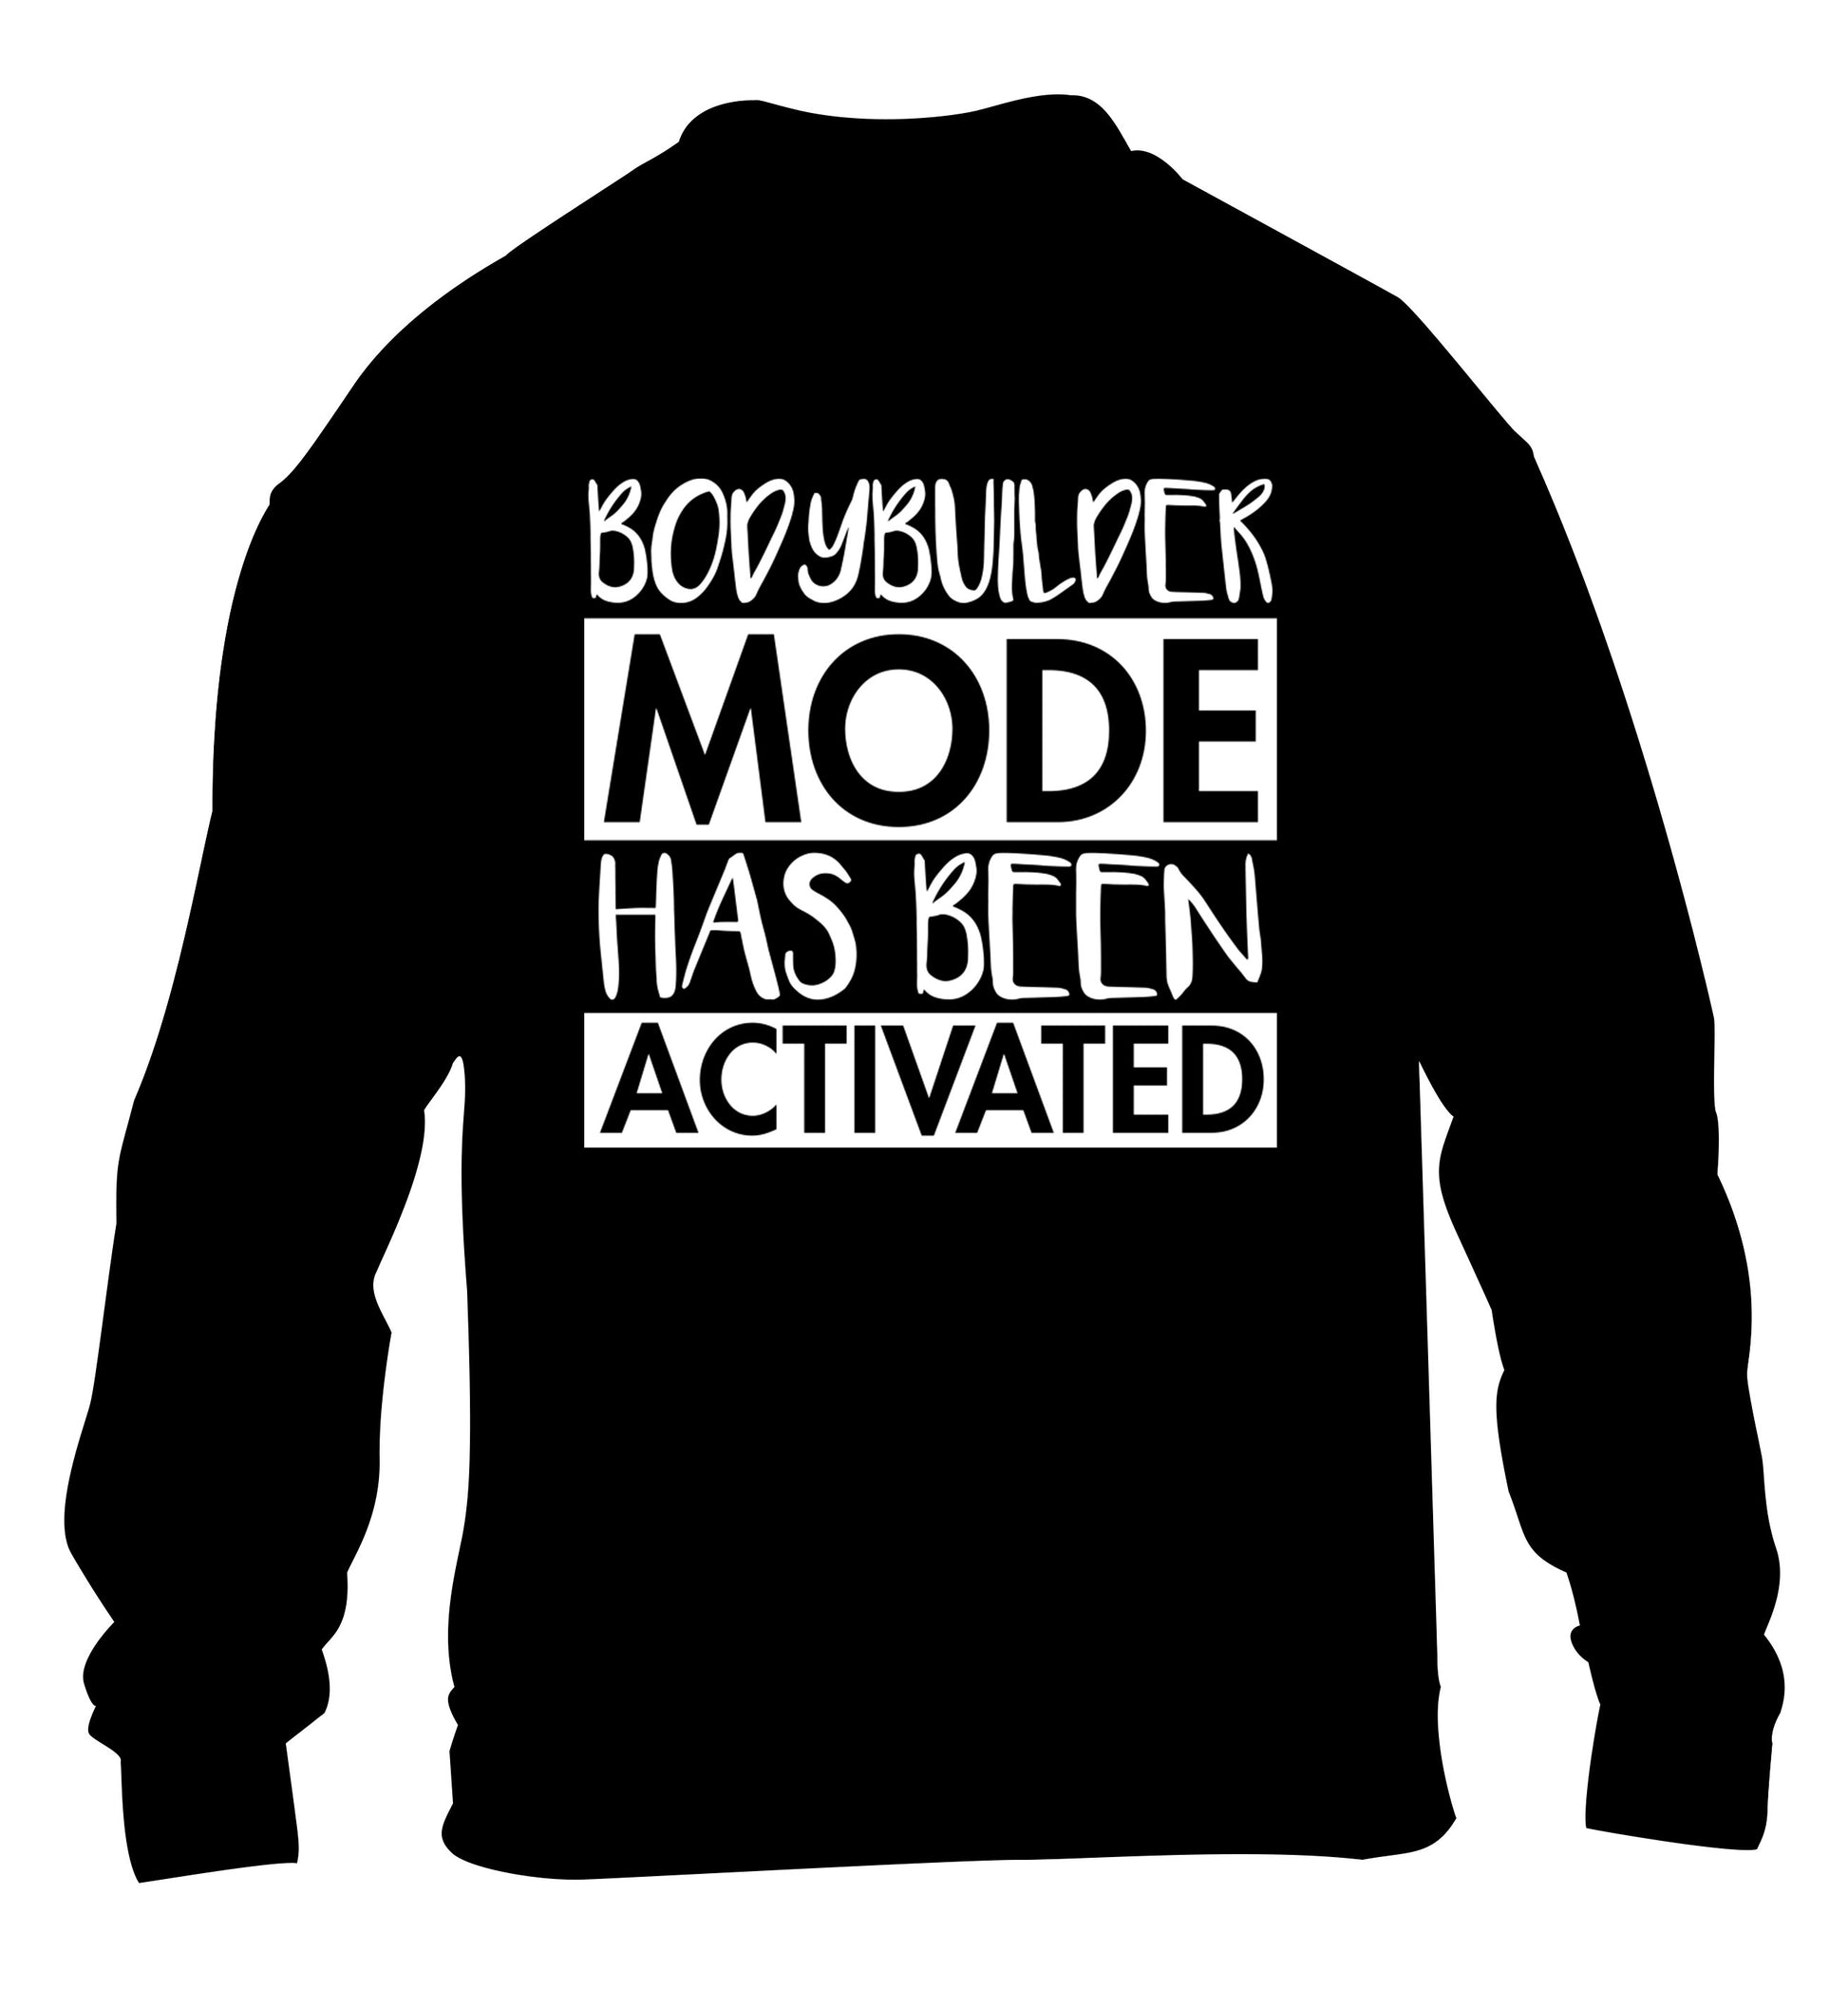 Bodybuilder mode activated children's black sweater 12-14 Years